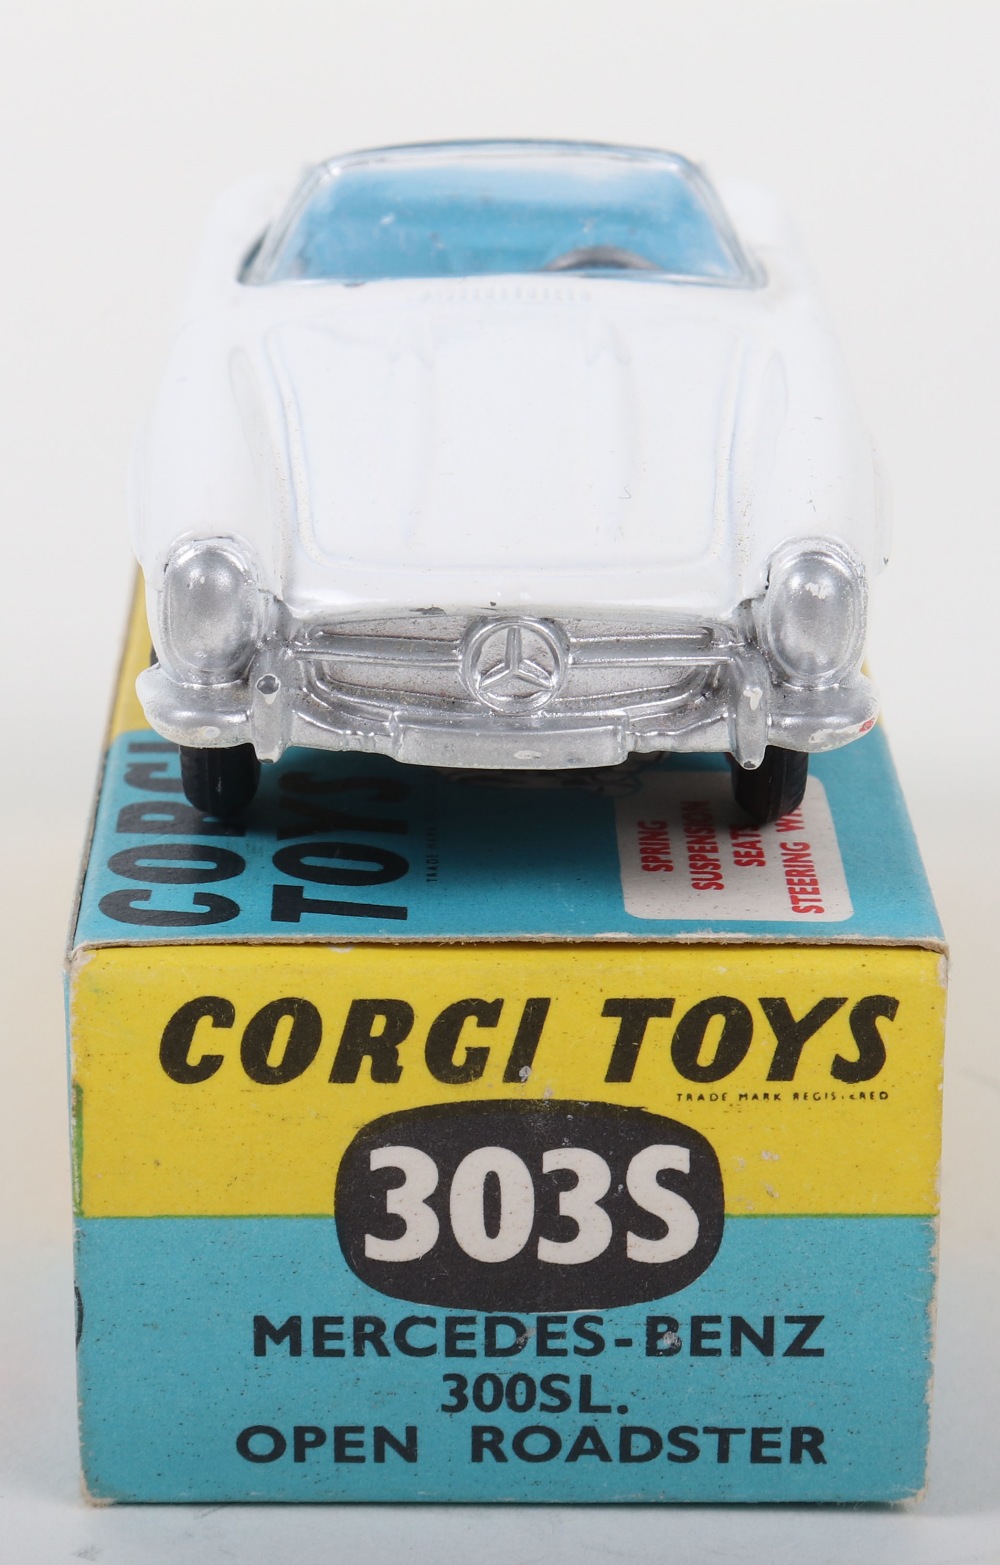 Scarce Corgi Toys 303S Mercedes-Benz 300SL Open Roadster - Image 3 of 5